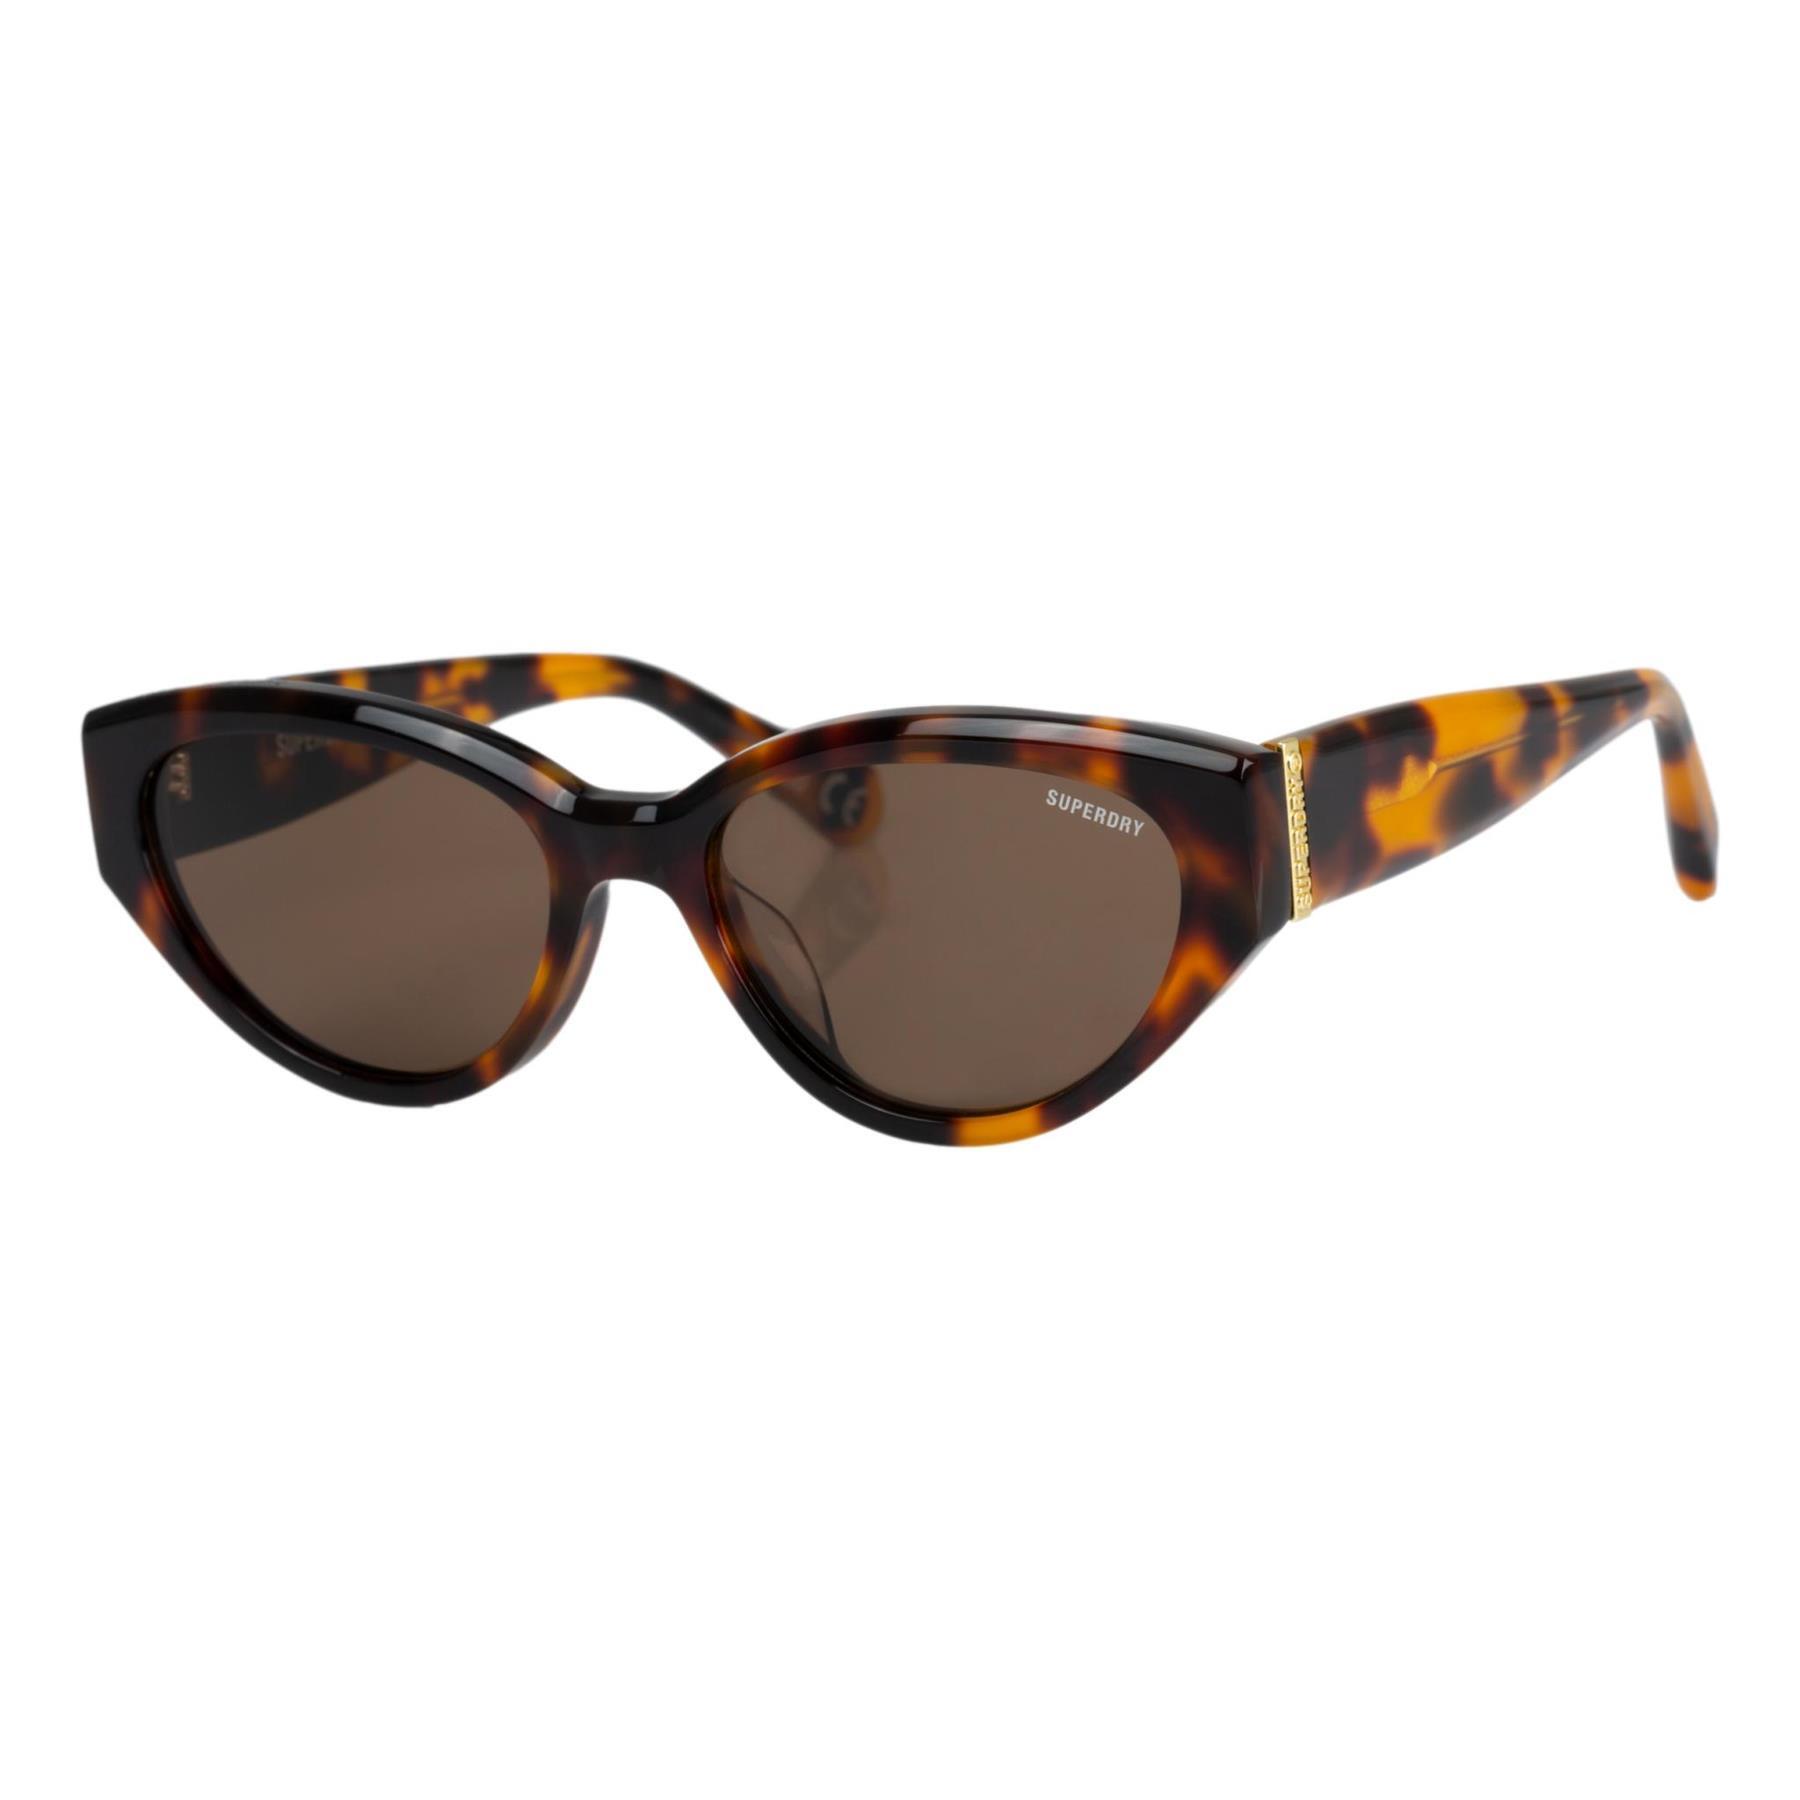 SUPERDRY Superdry 5013 Sunglasses - Tort